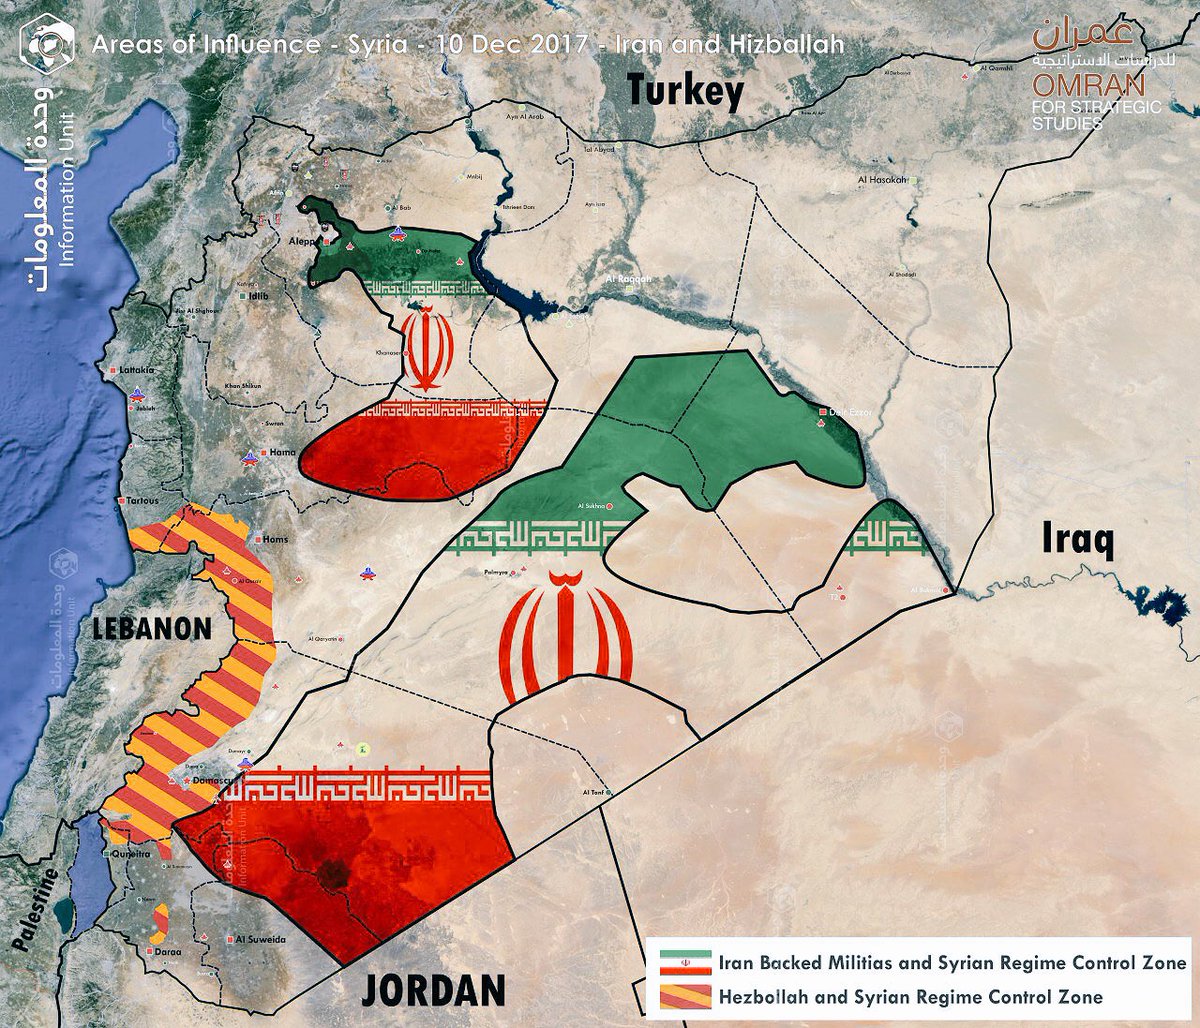 تويتر \ Navvar Şaban على تويتر: "Most recent Abstract #Map for #Iran and  #Hizballah areas of influence and control in #Syria https://t.co/lphIWaenu6"